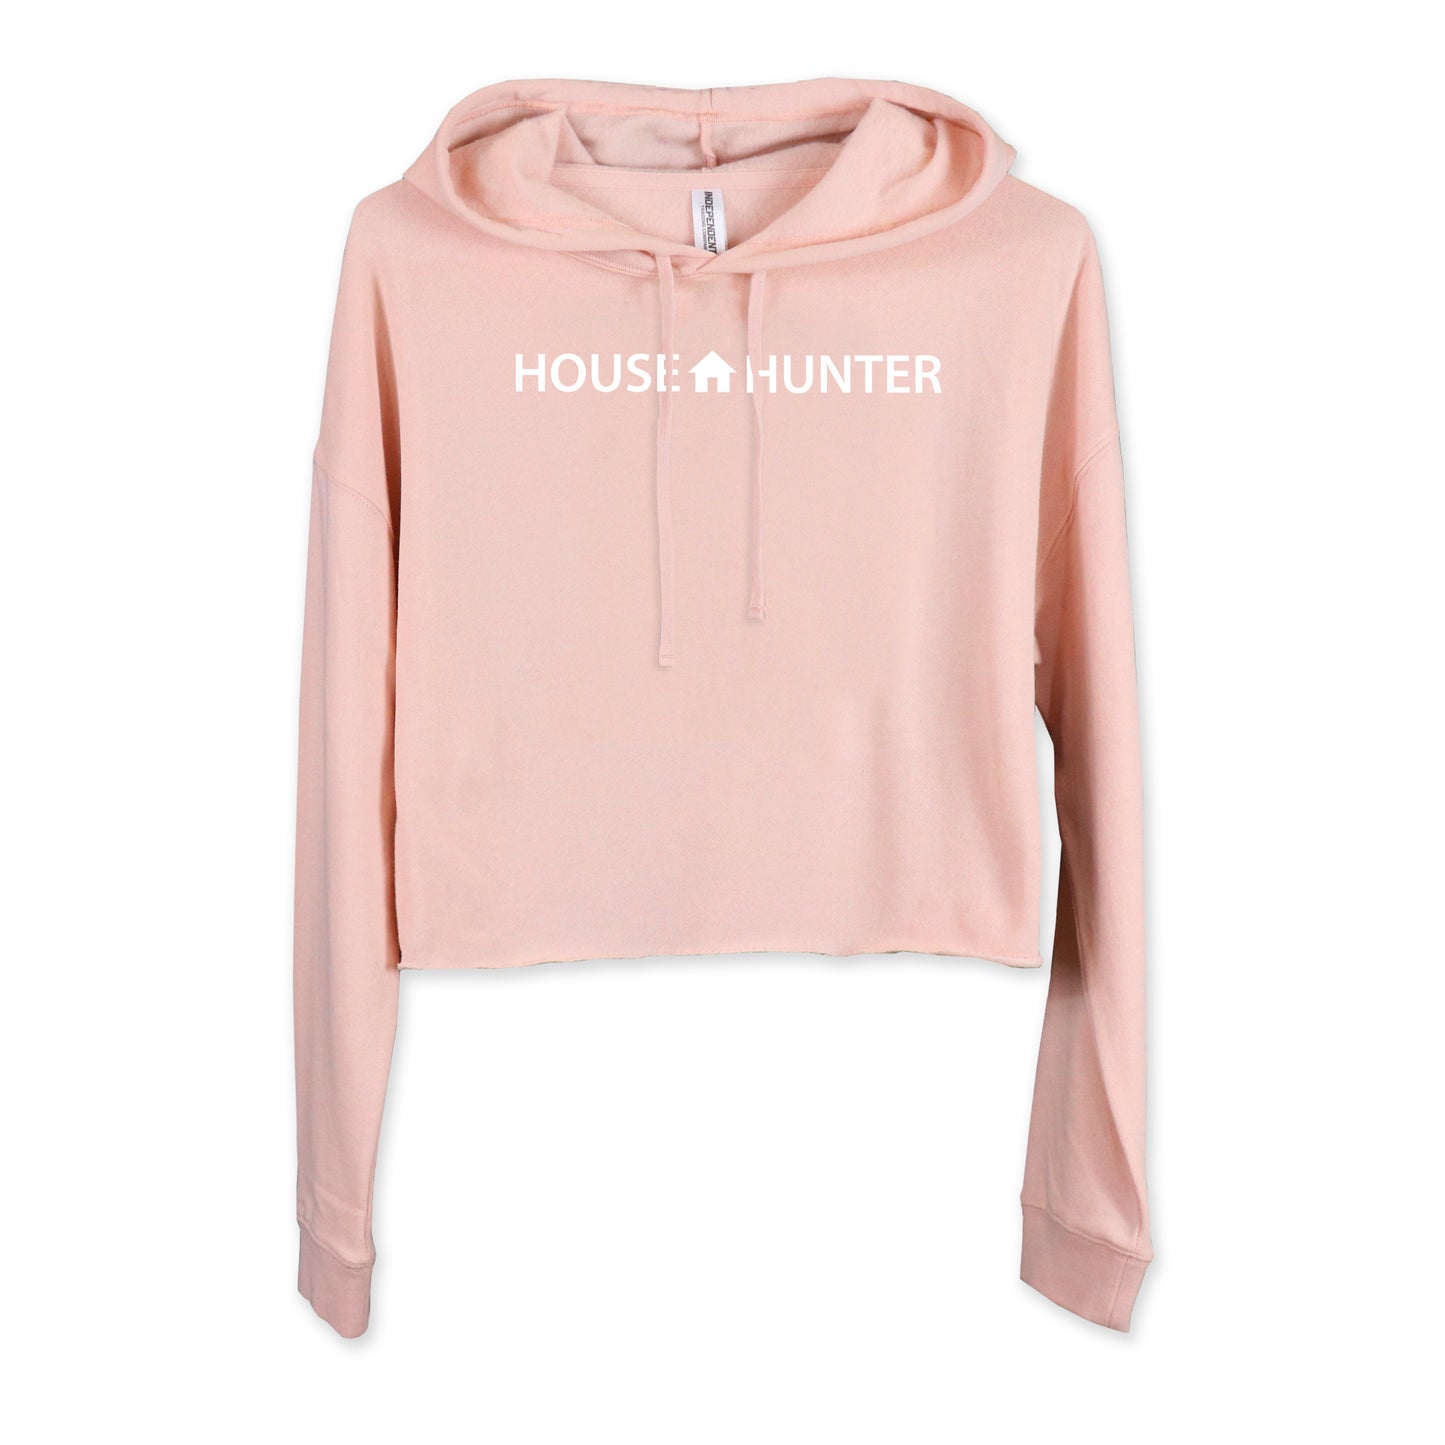 House Hunter Real Estate Life Sweatshirt